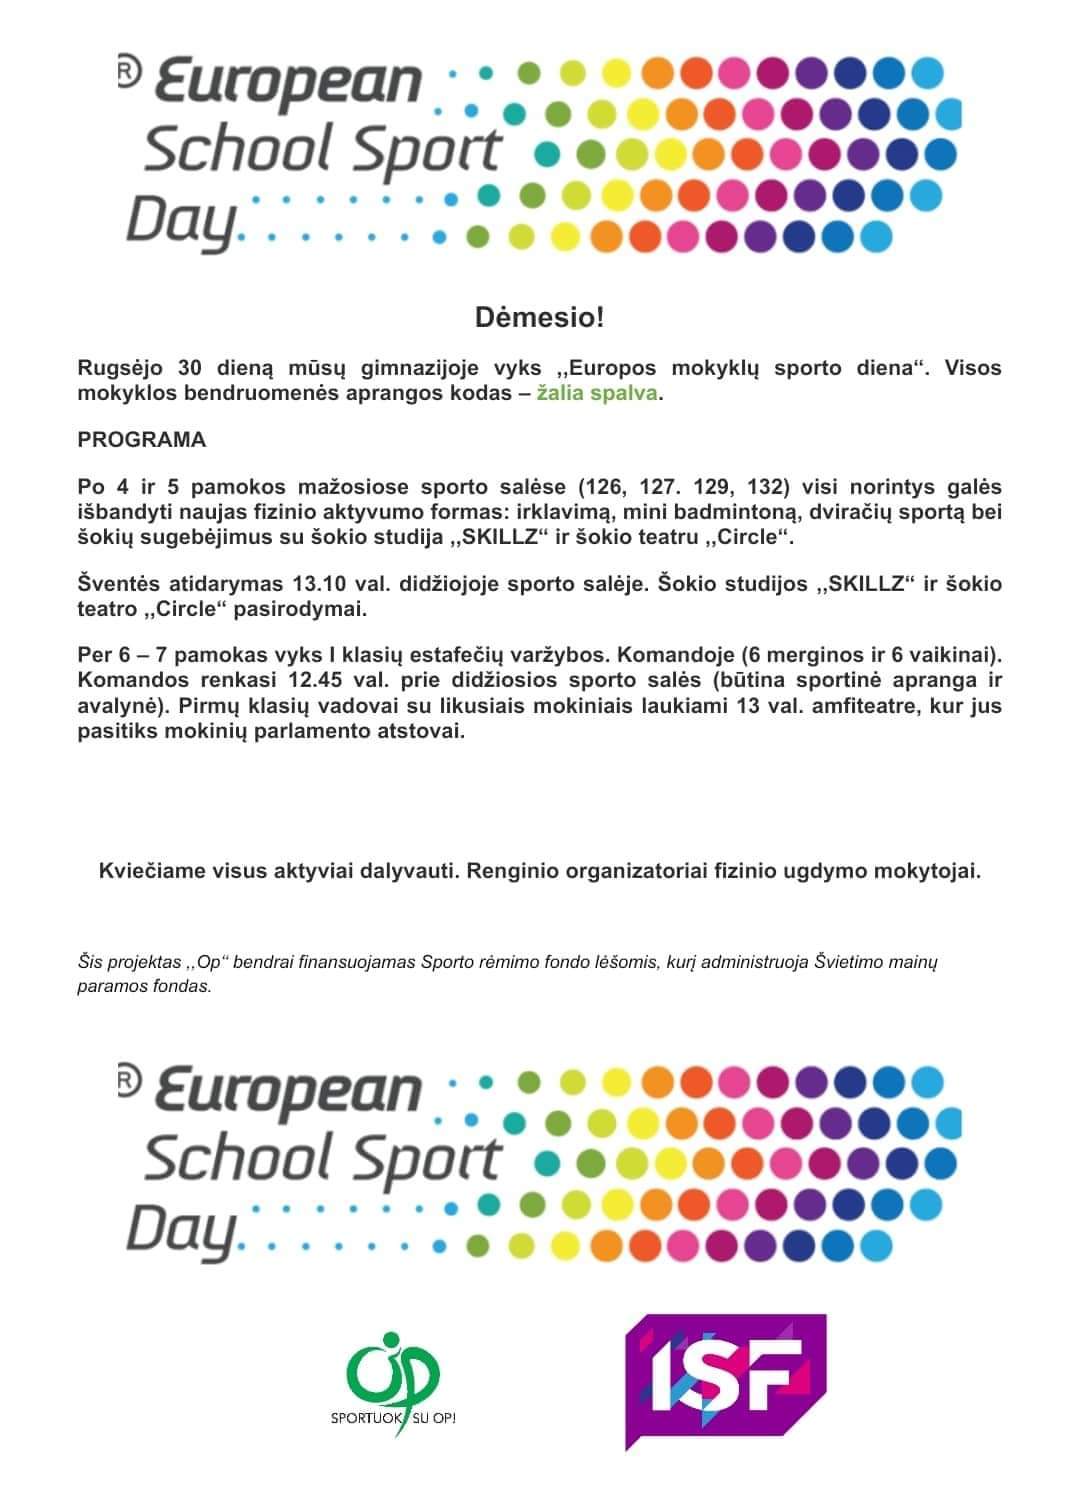 European school sport day